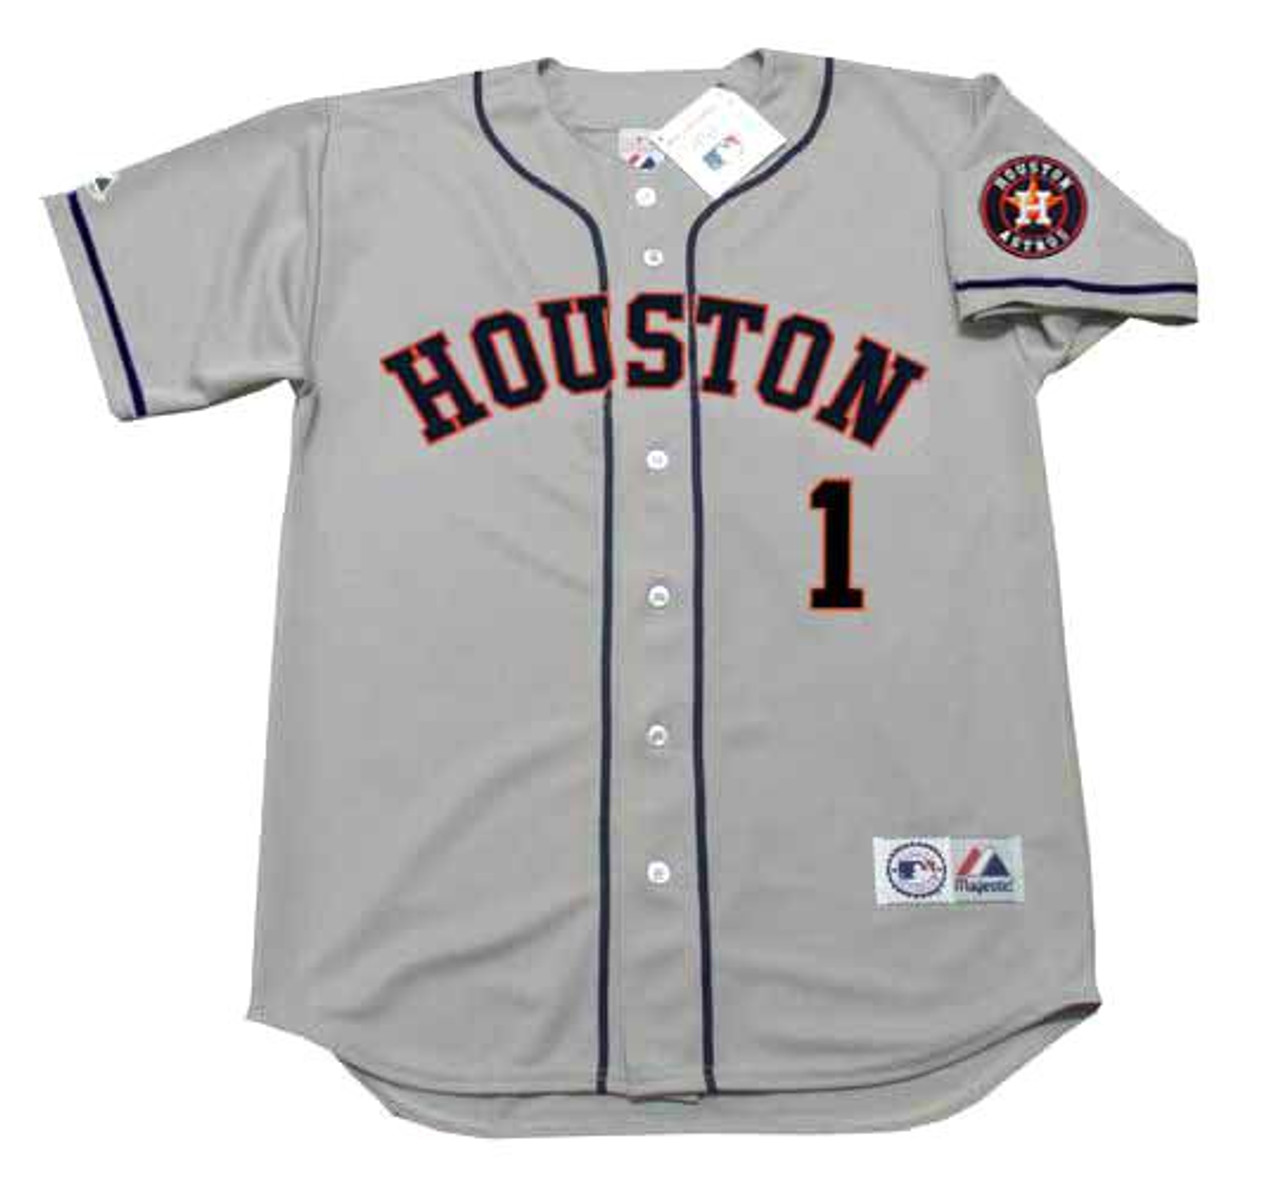 Men's Majestic Orange Houston Astros Cool Base Custom Jersey